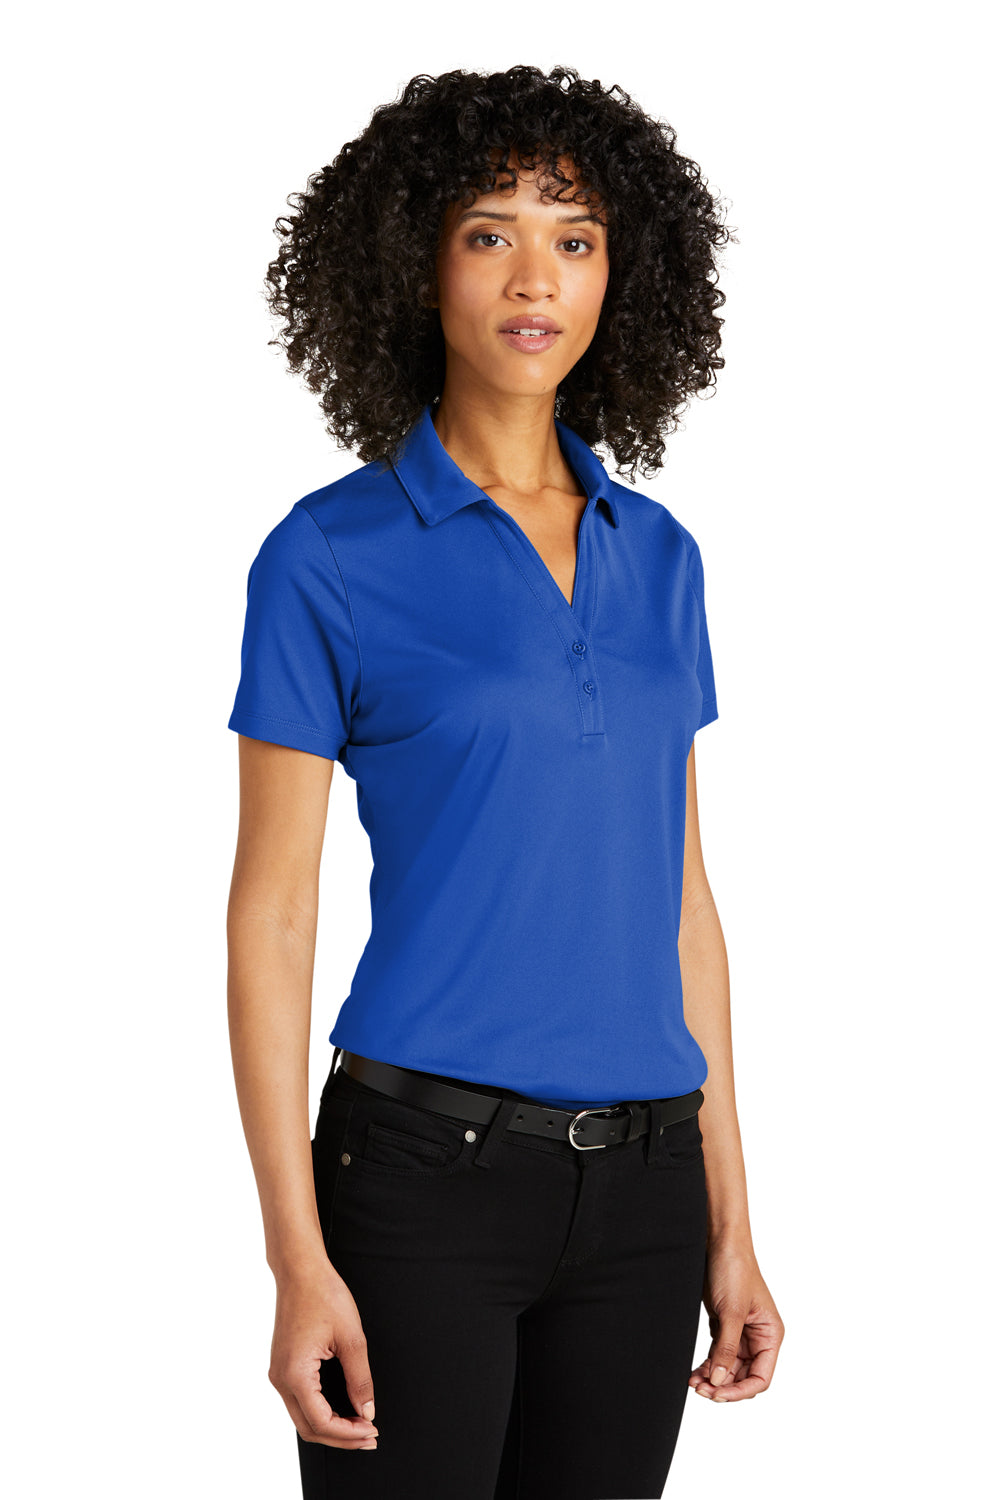 Port Authority LK863 C-Free Performance Short Sleeve Polo Shirt True Royal Blue 3Q